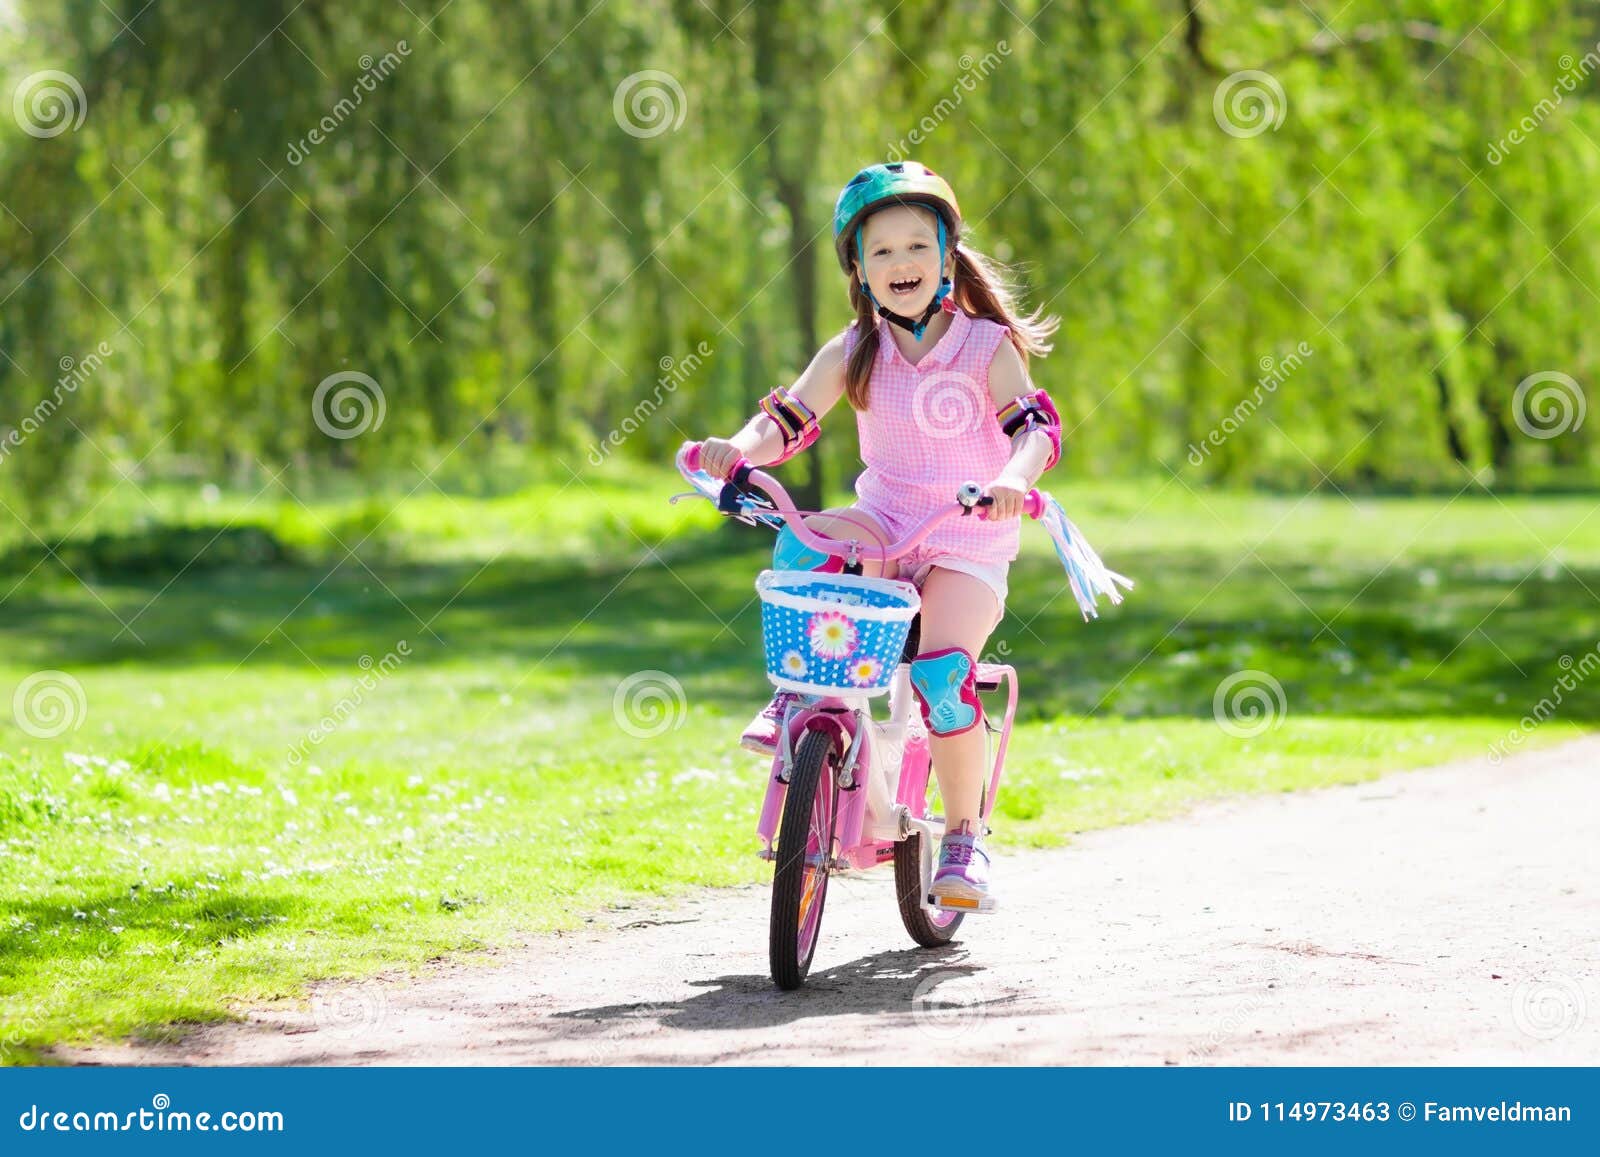 child on bike. kids ride bicycle. girl cycling.